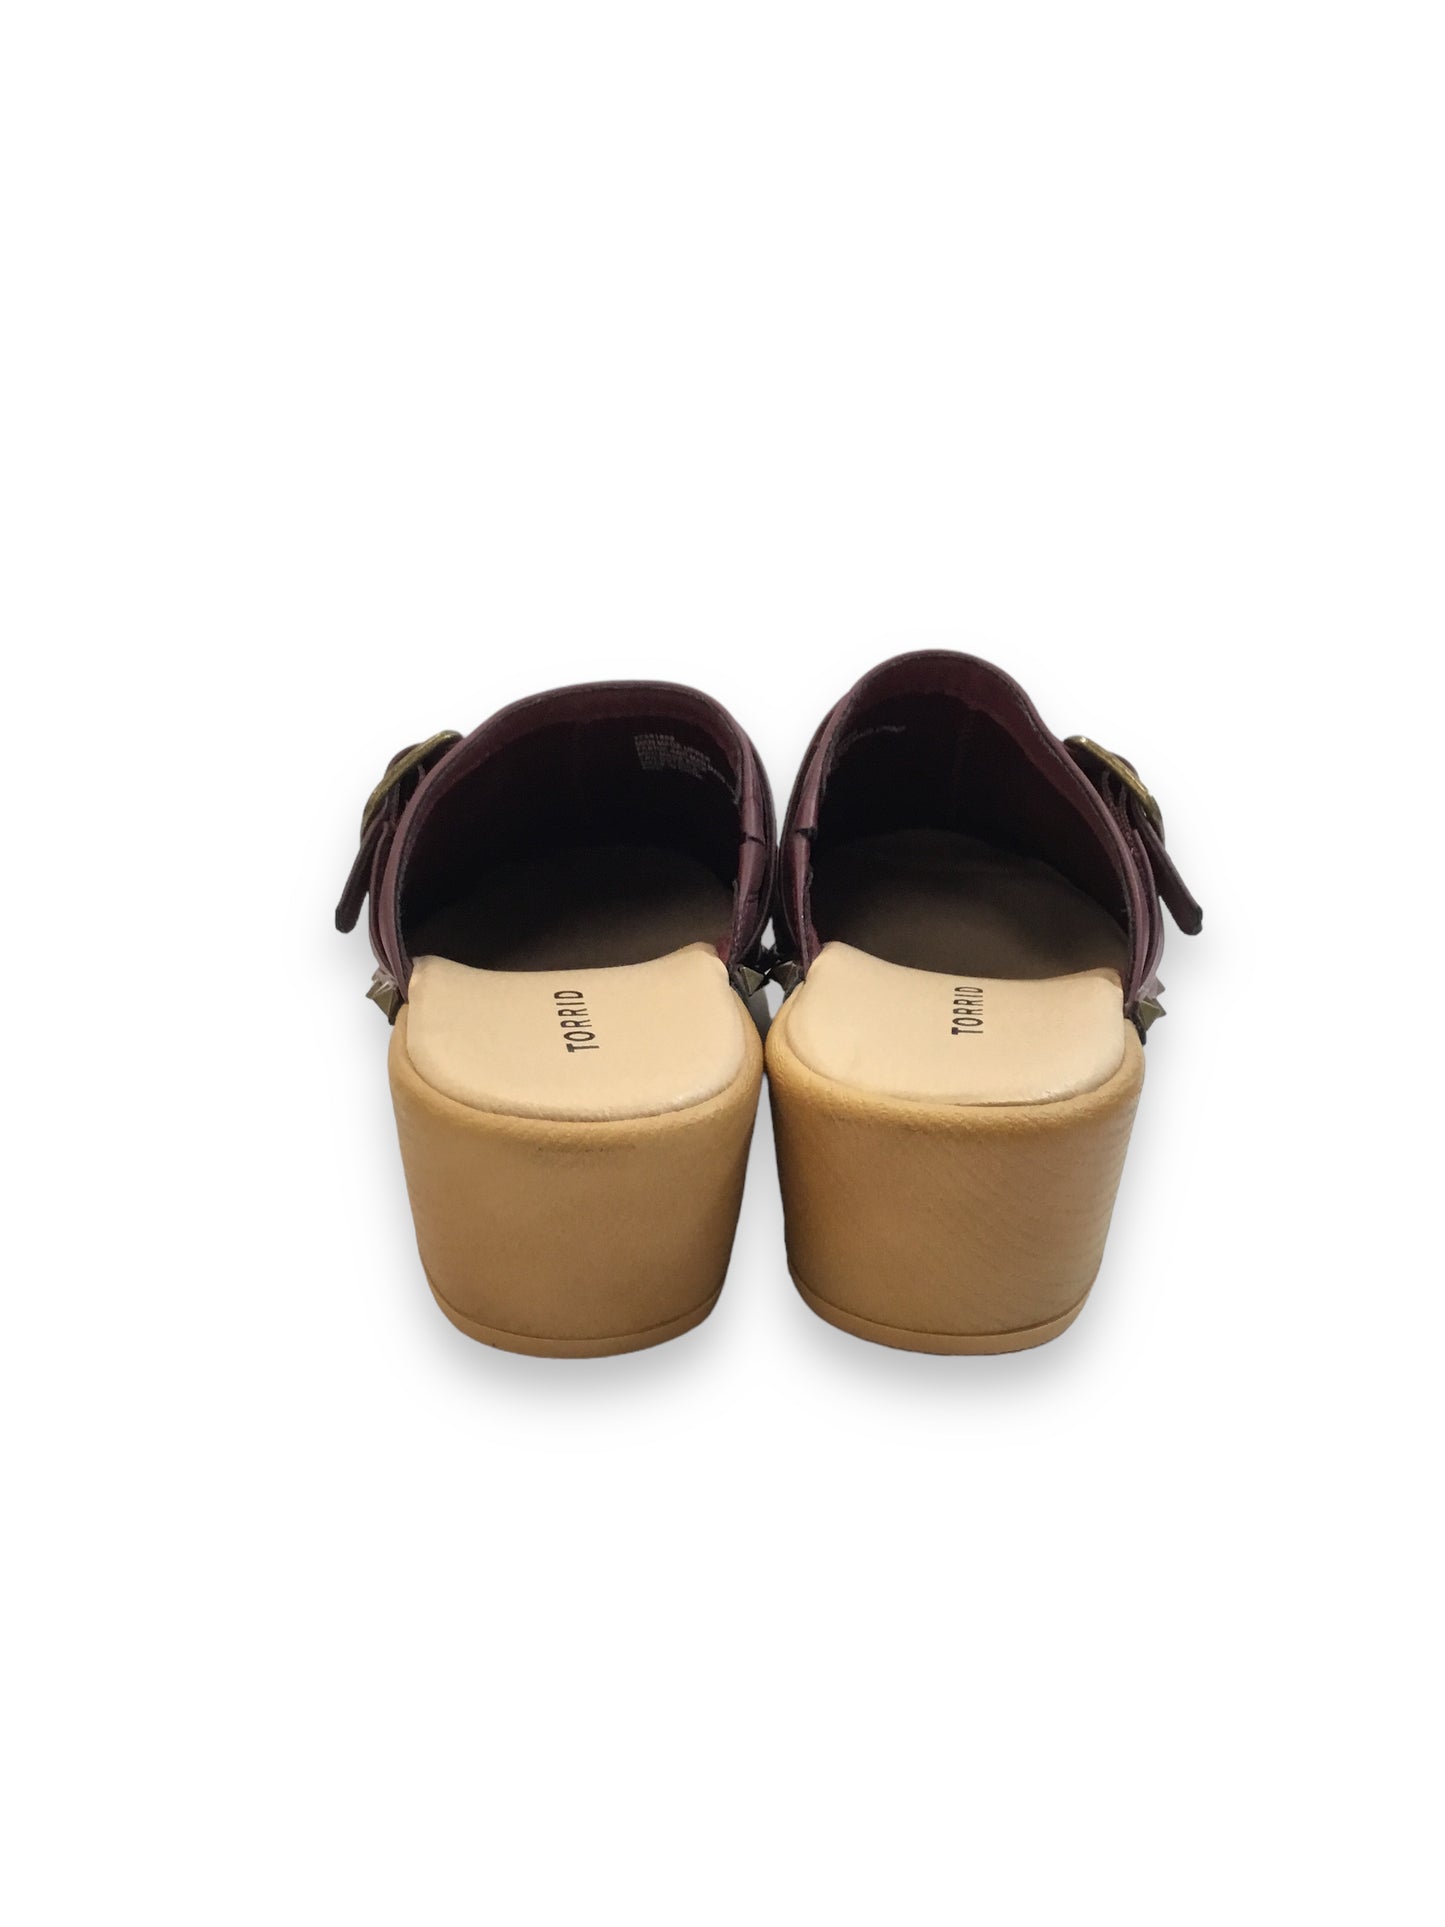 Shoes Flats Mule & Slide By Torrid  Size: 8